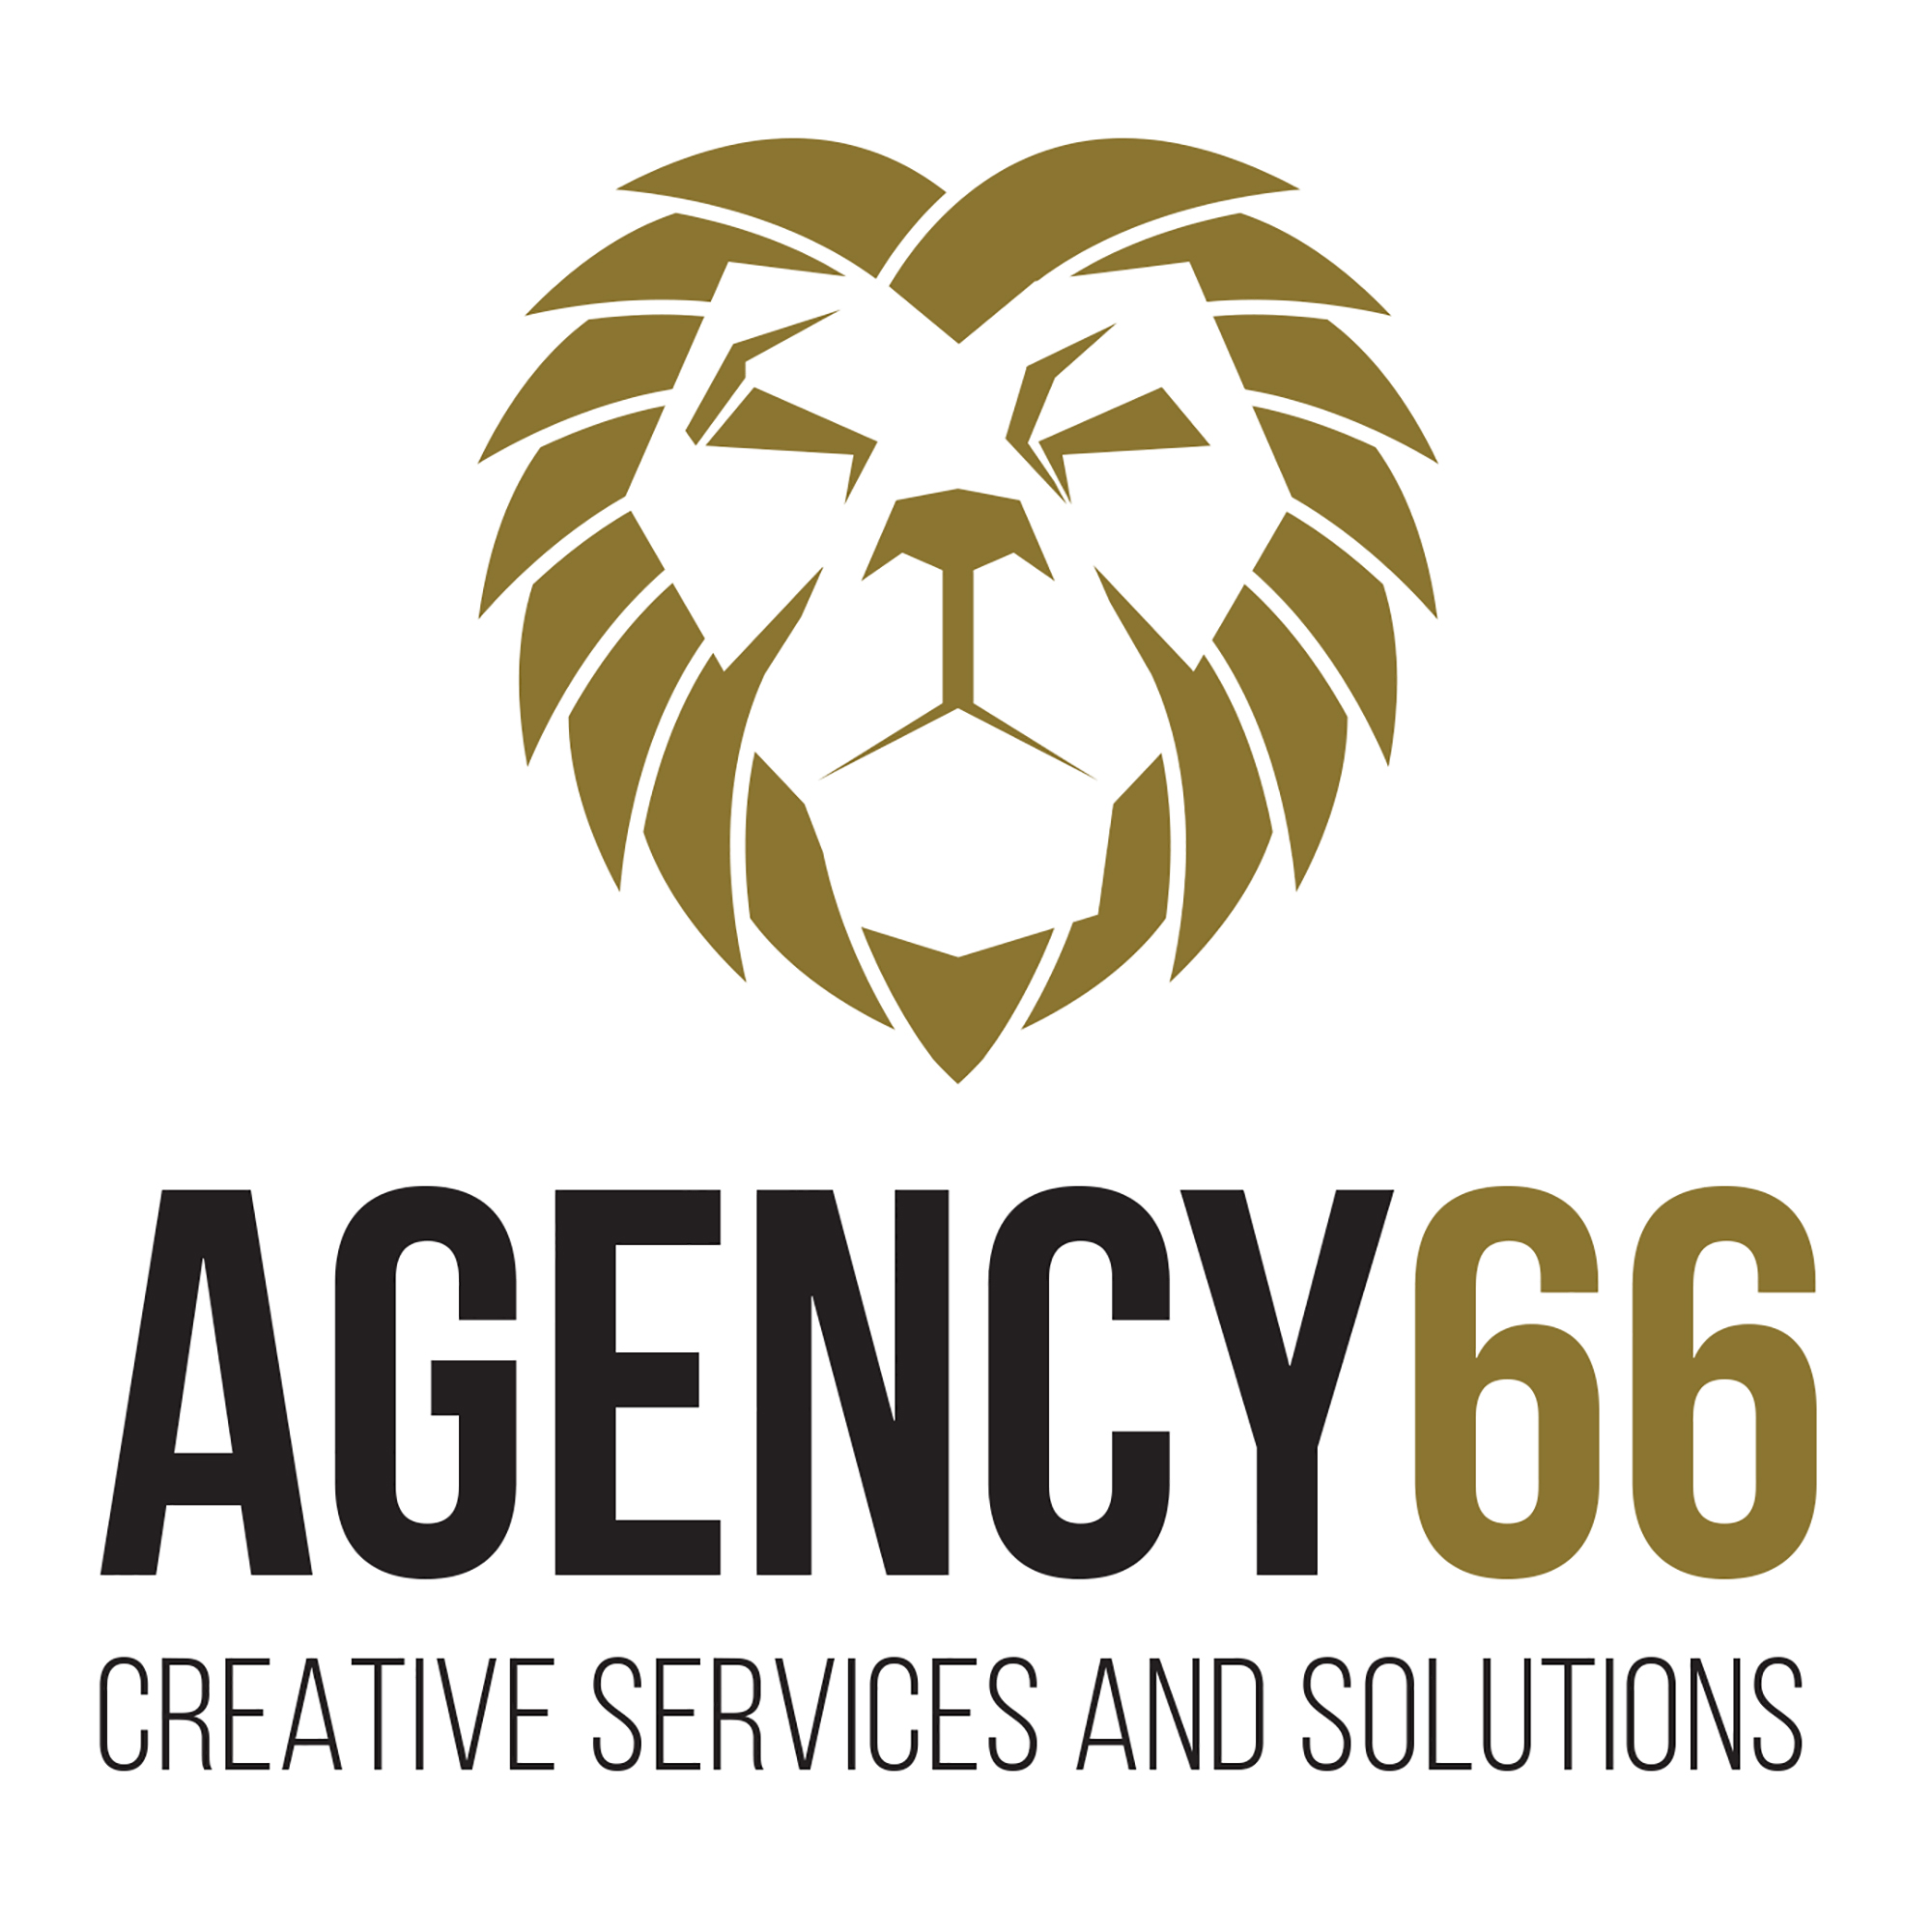 Agency 66